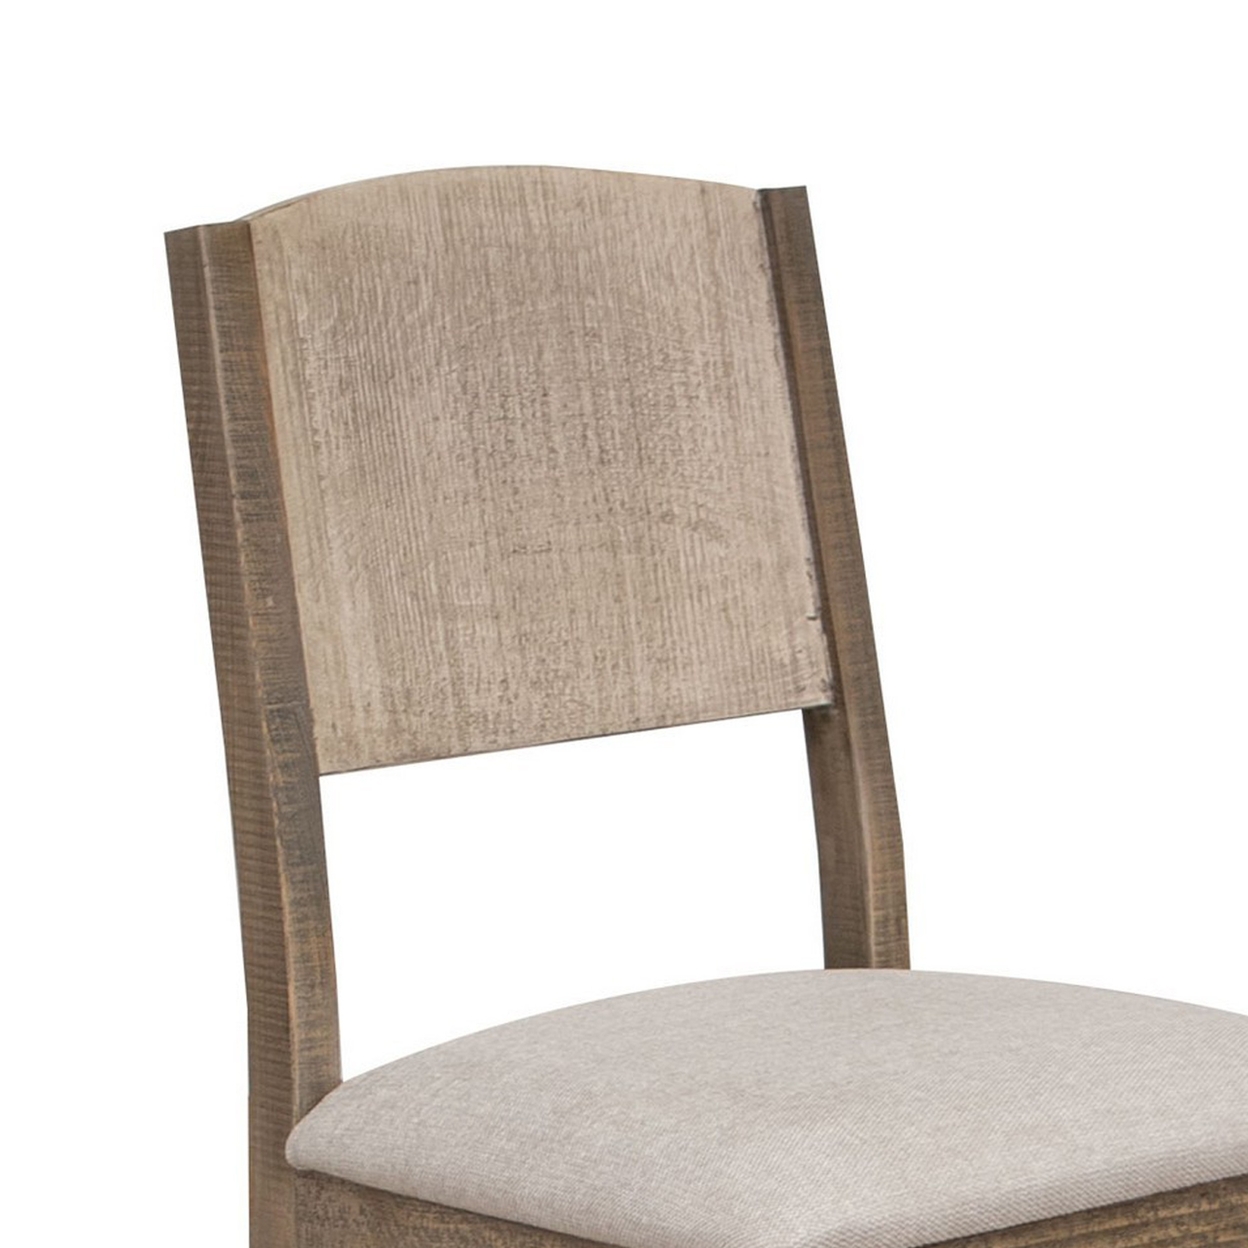 Aose 22 Inch Dining Chair Set Of 2, Pine Wood, Rustic Brown, Gray Fabric - Saltoro Sherpi